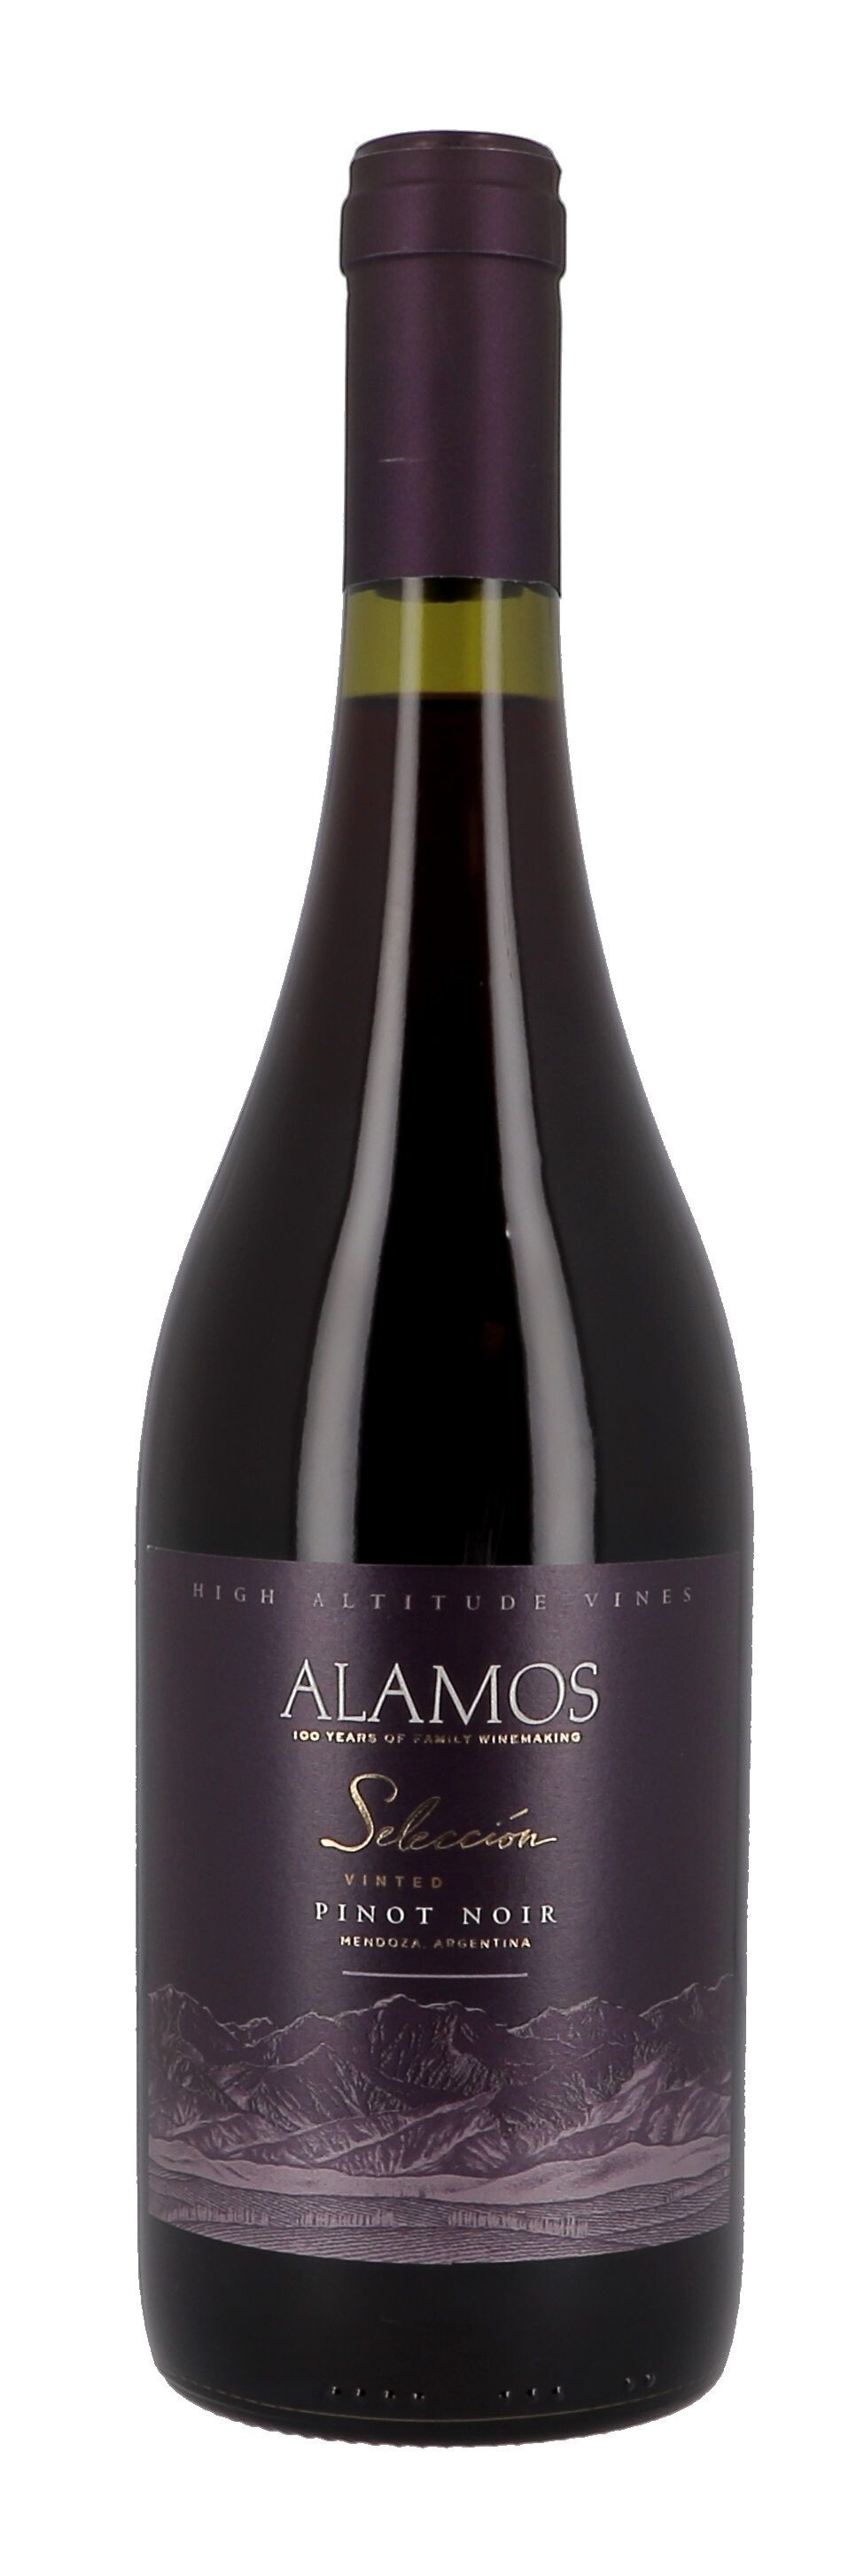 Alamos Pinot Noir 75cl 2018 Catena Zatana - Argentina Wine